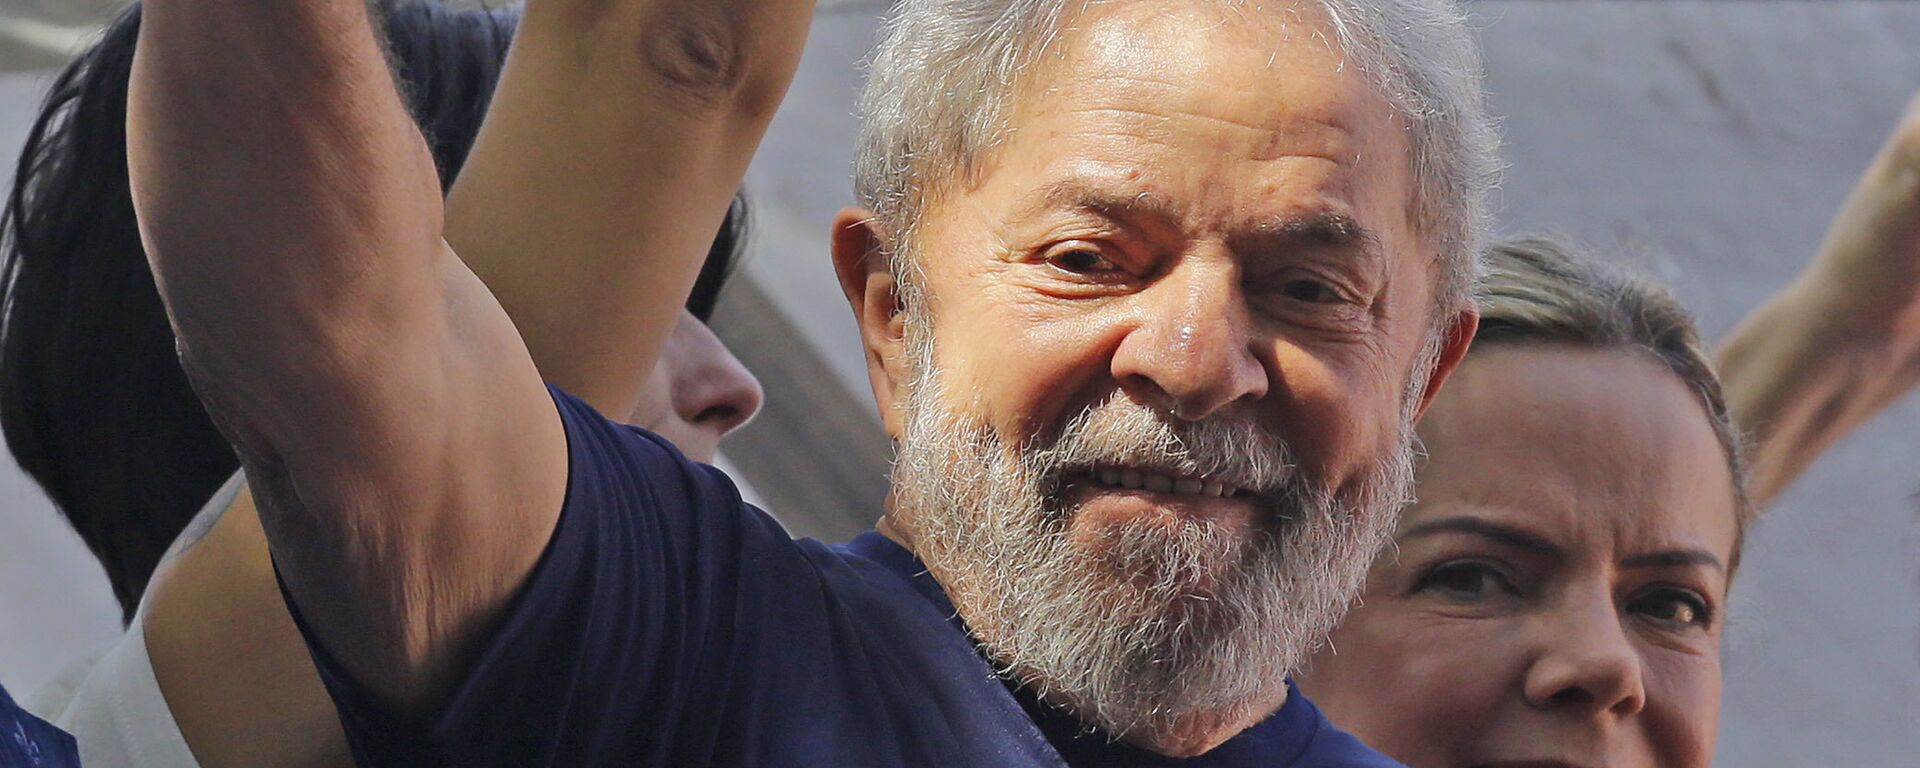 Luiz Inácio Lula da Silva, expresidente de Brasil  - Sputnik Mundo, 1920, 17.08.2021